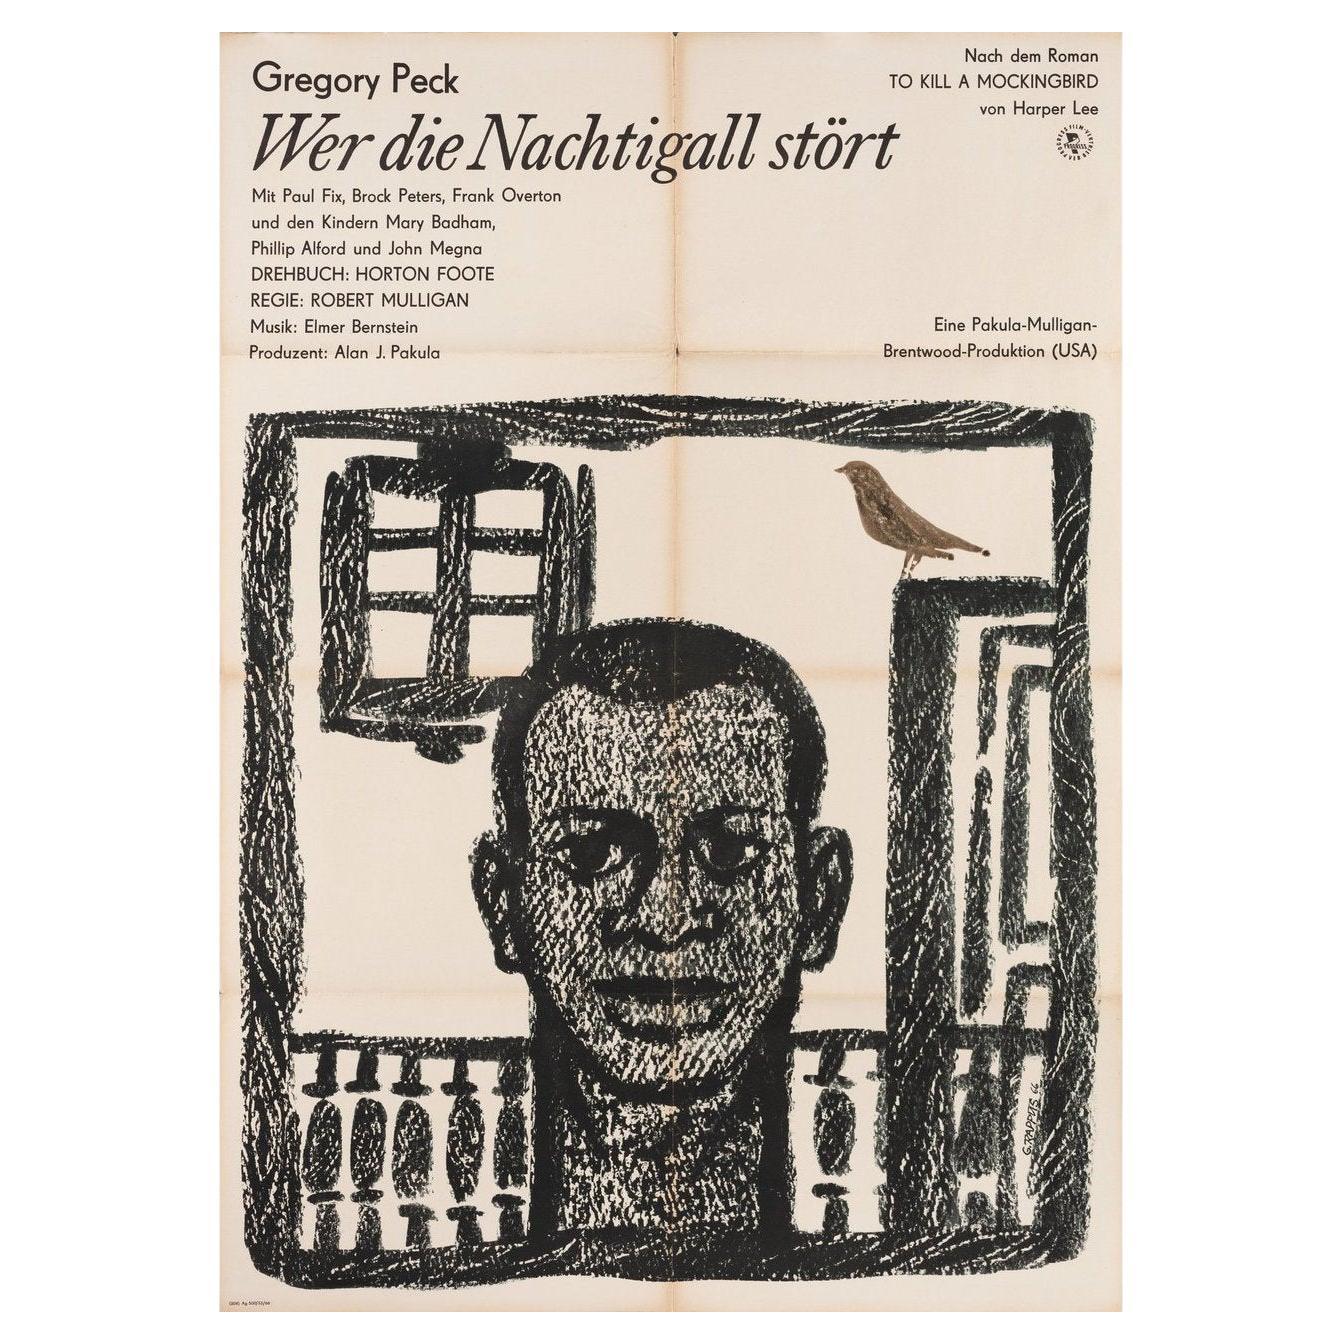 To Kill a Mockingbird 1966 East German A1 Film Poster